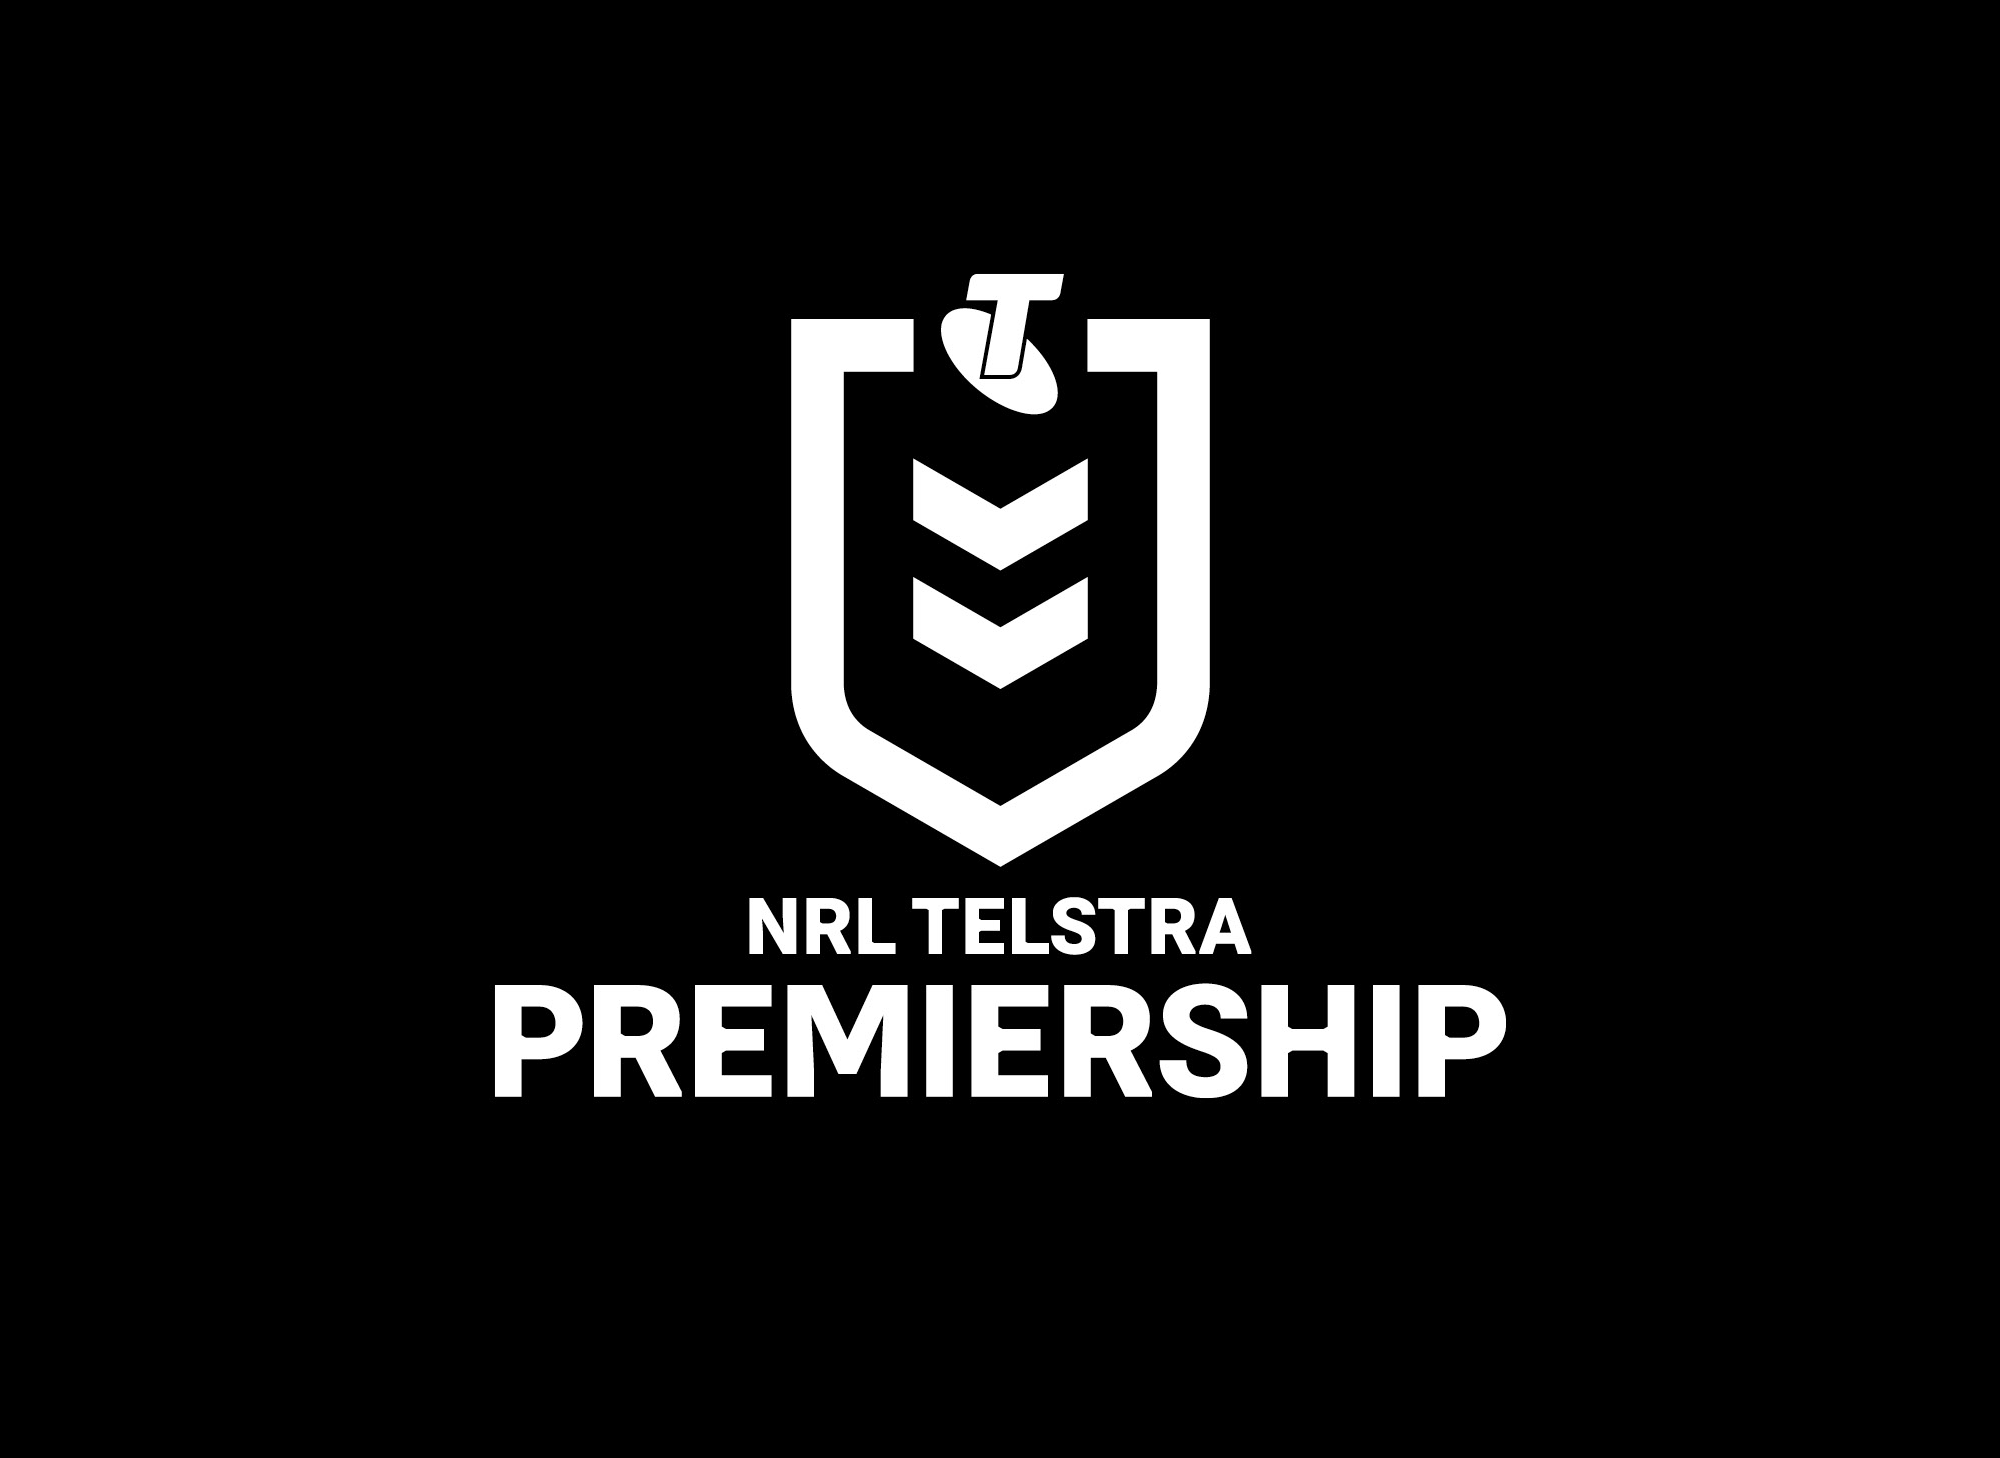 New Consumer Telstra Logo - Brand New: New Logo and Identity for NRL Telstra Premiership by WK ...